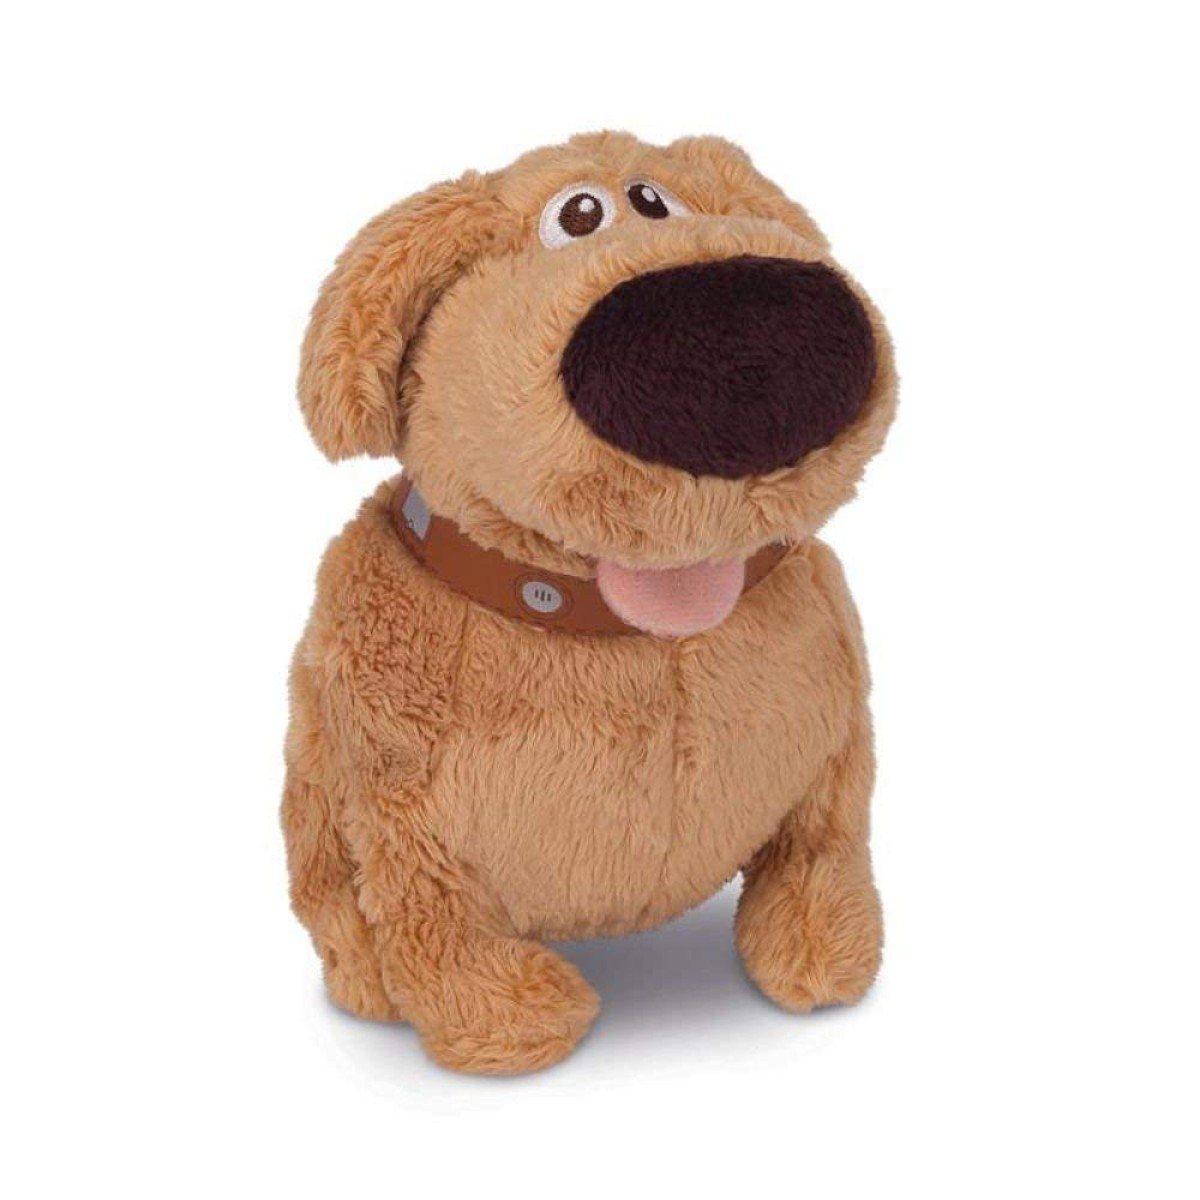 DIsney Pixar Dug the Dog Plush - Argosy dug stuffed animal. 